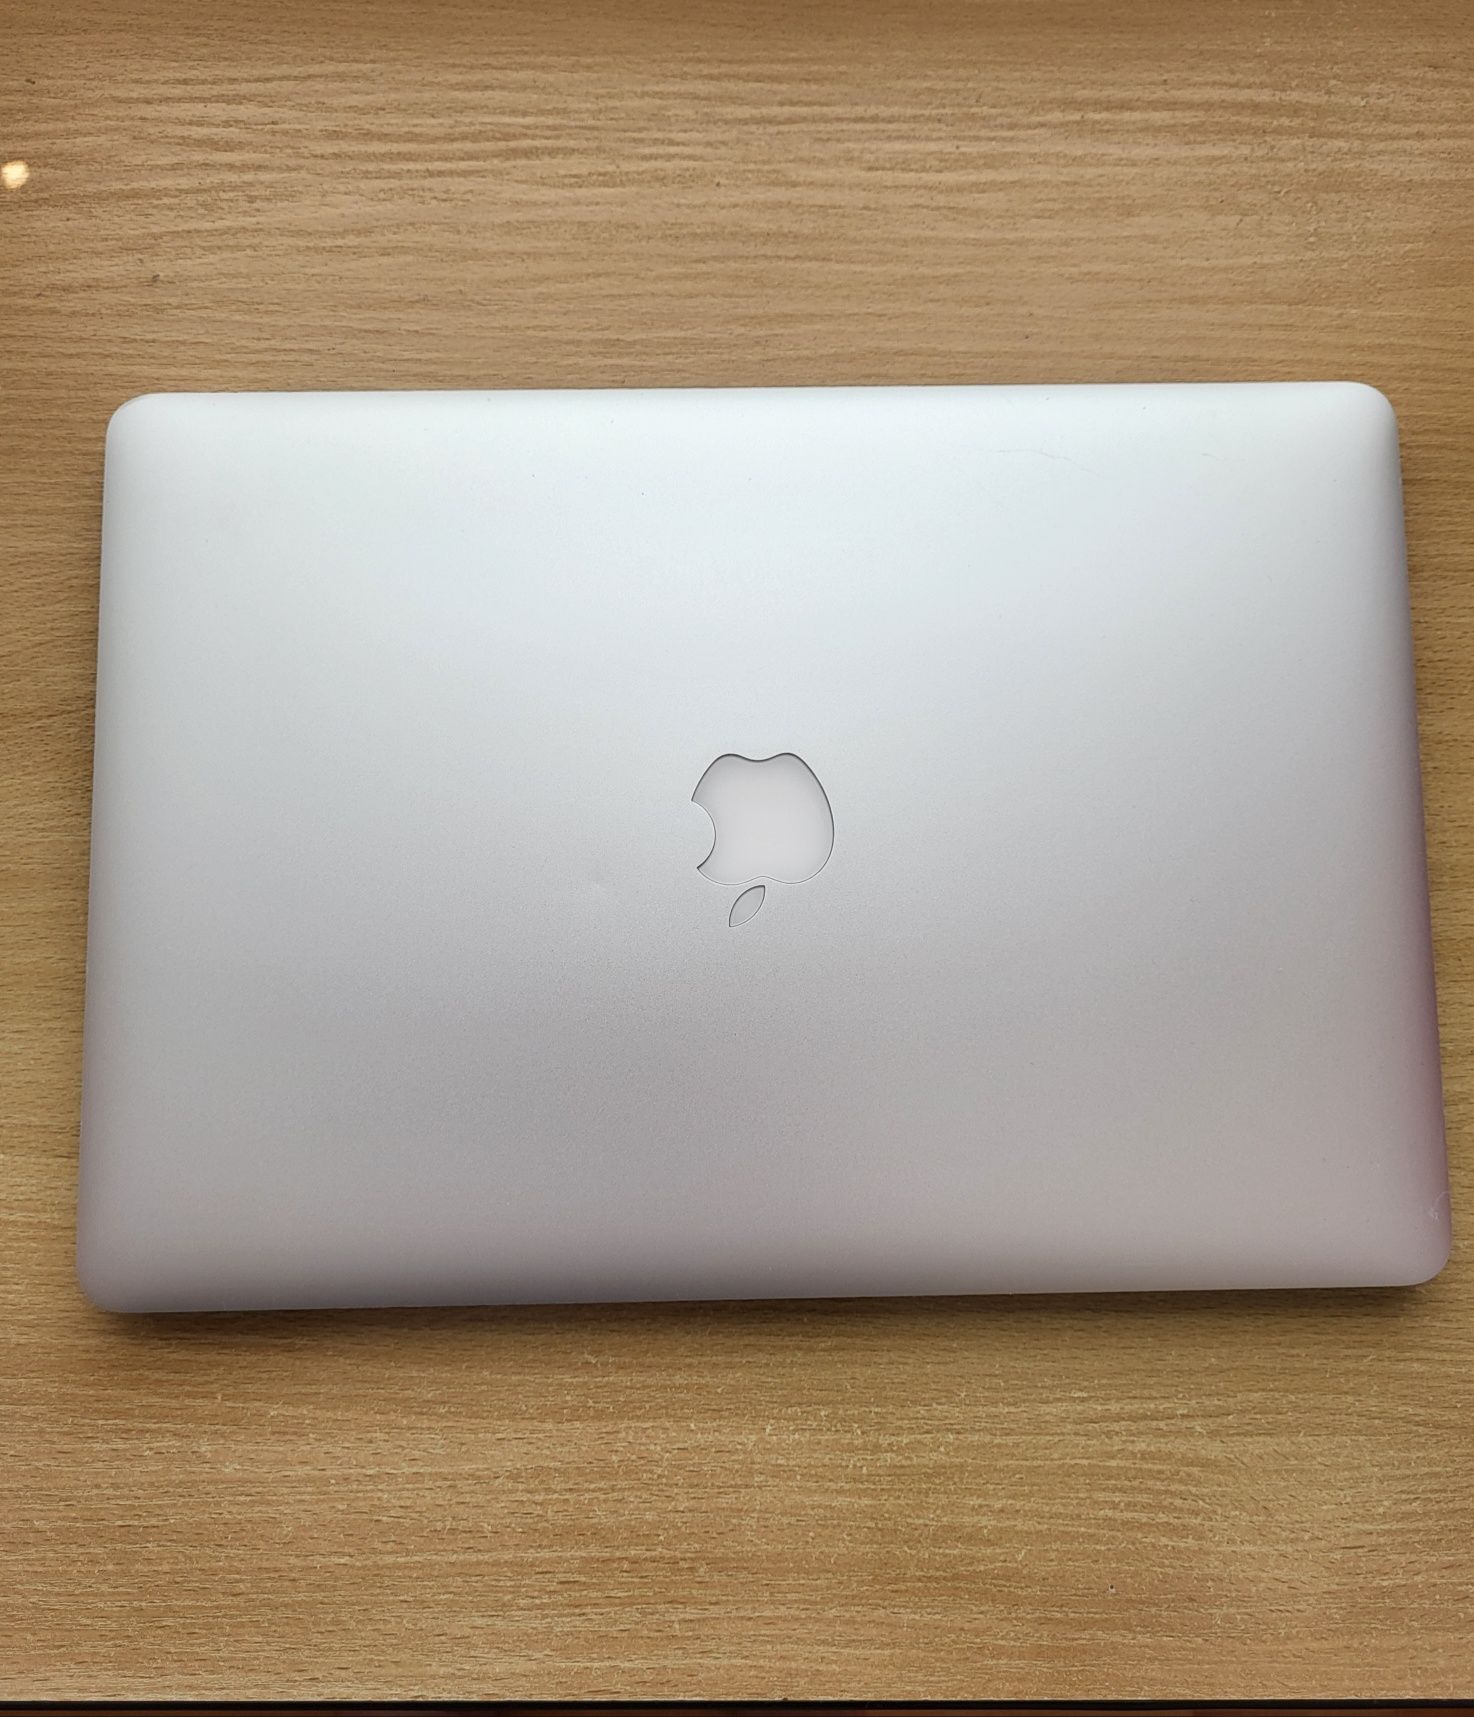 Macbook Pro mid-2014 15,4" Retina Display